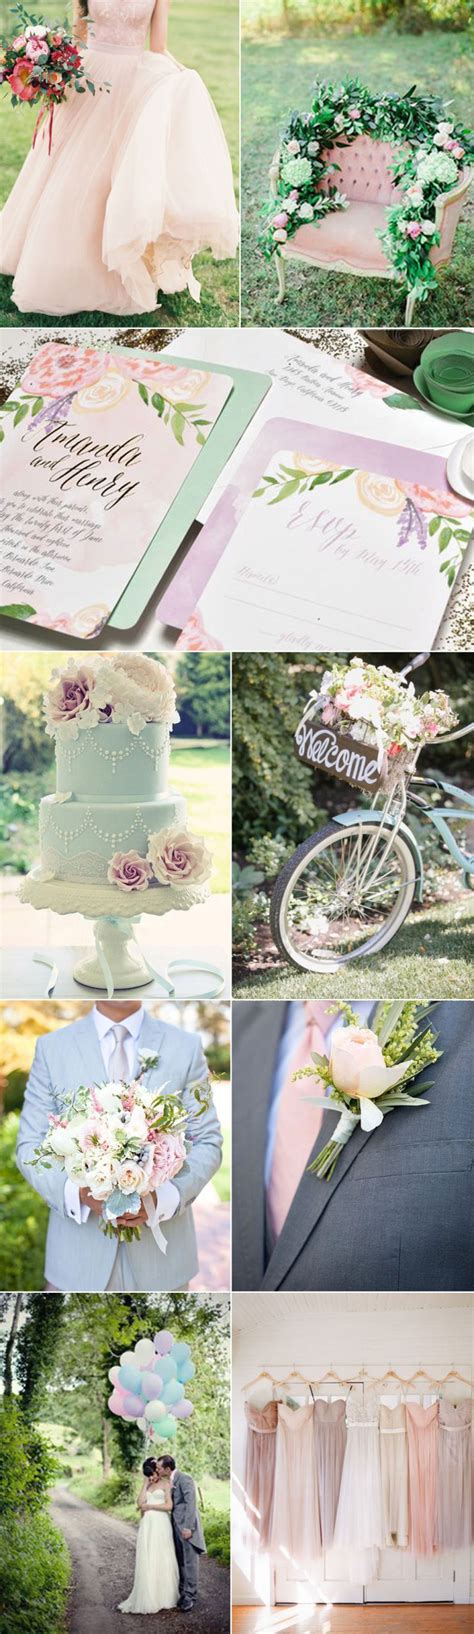 Wedding Color Inspiration For Pastel Weddings Groomsmen Ties In Pastels